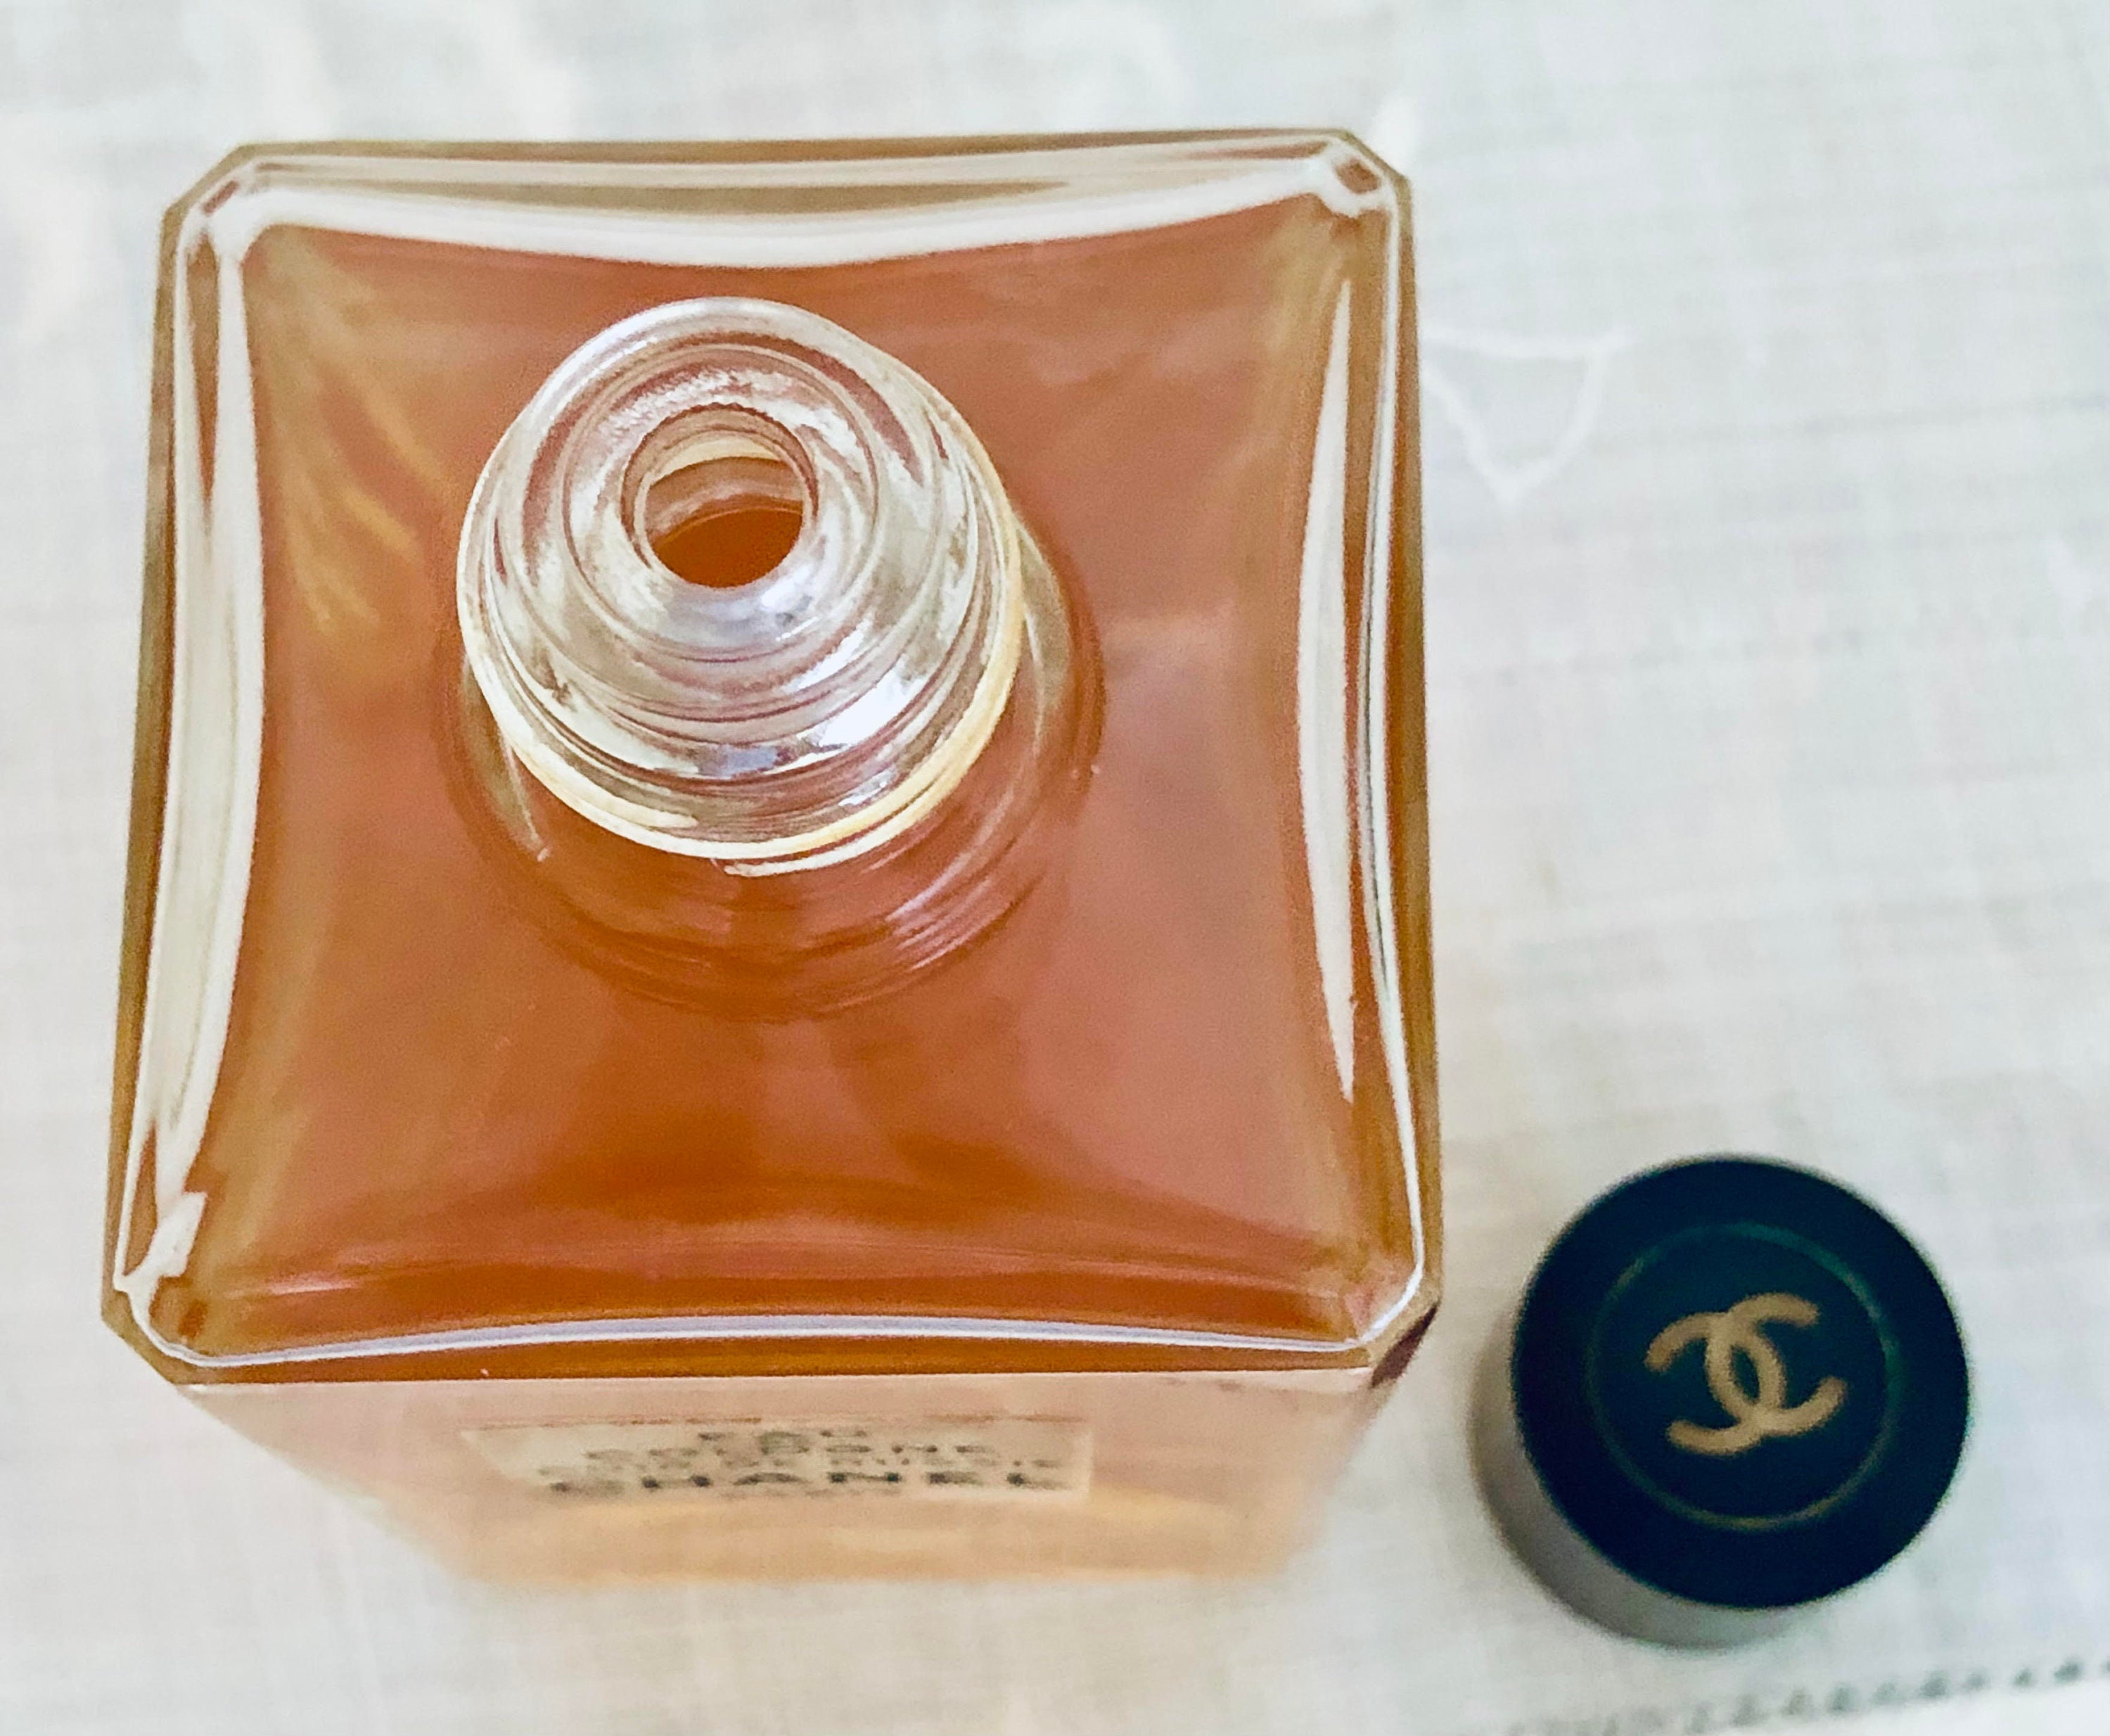 Chanel Perfume Bottles: Fake Chanel No. 5 Perfume on !